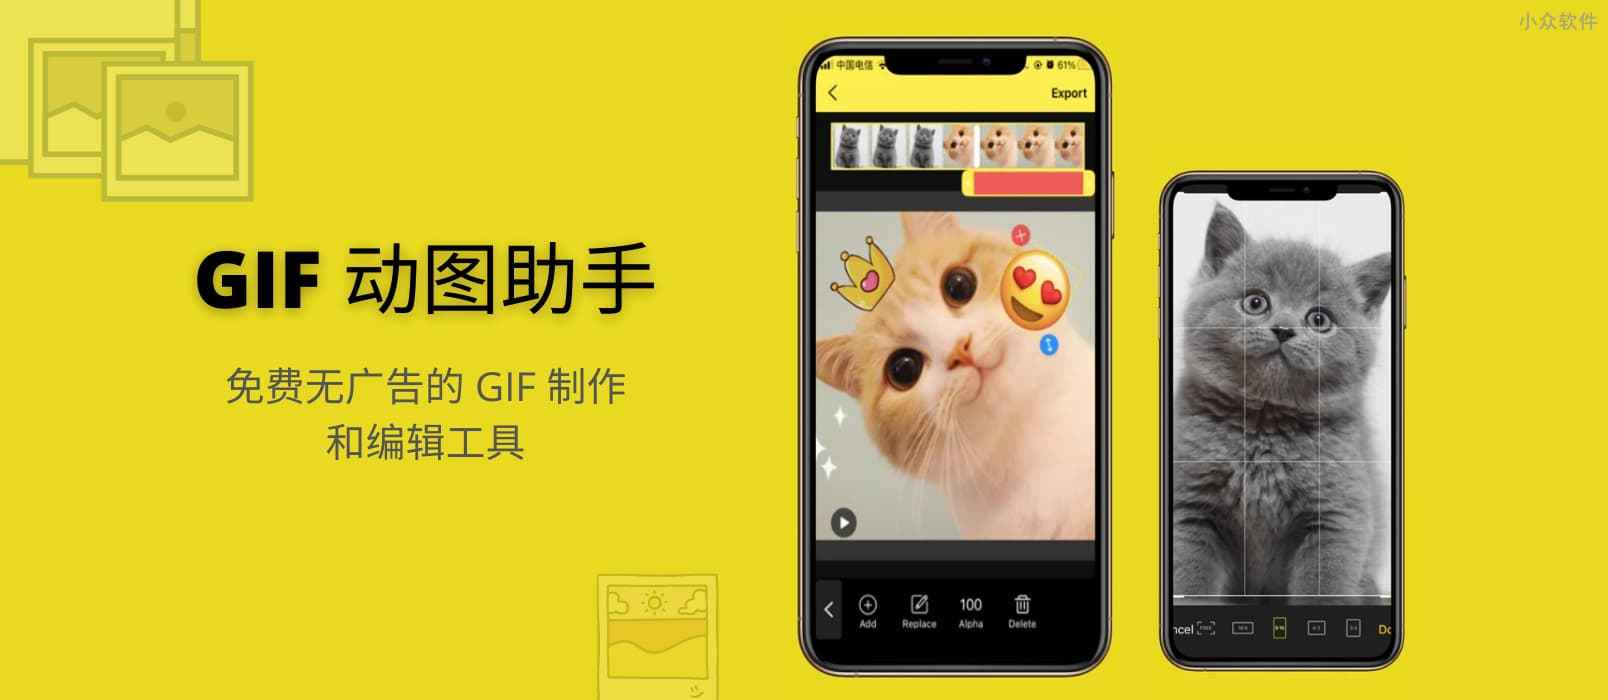 GIF 动图助手 -  免费无广告的 GIF 制作和编辑工具[iPhone/iPad]  